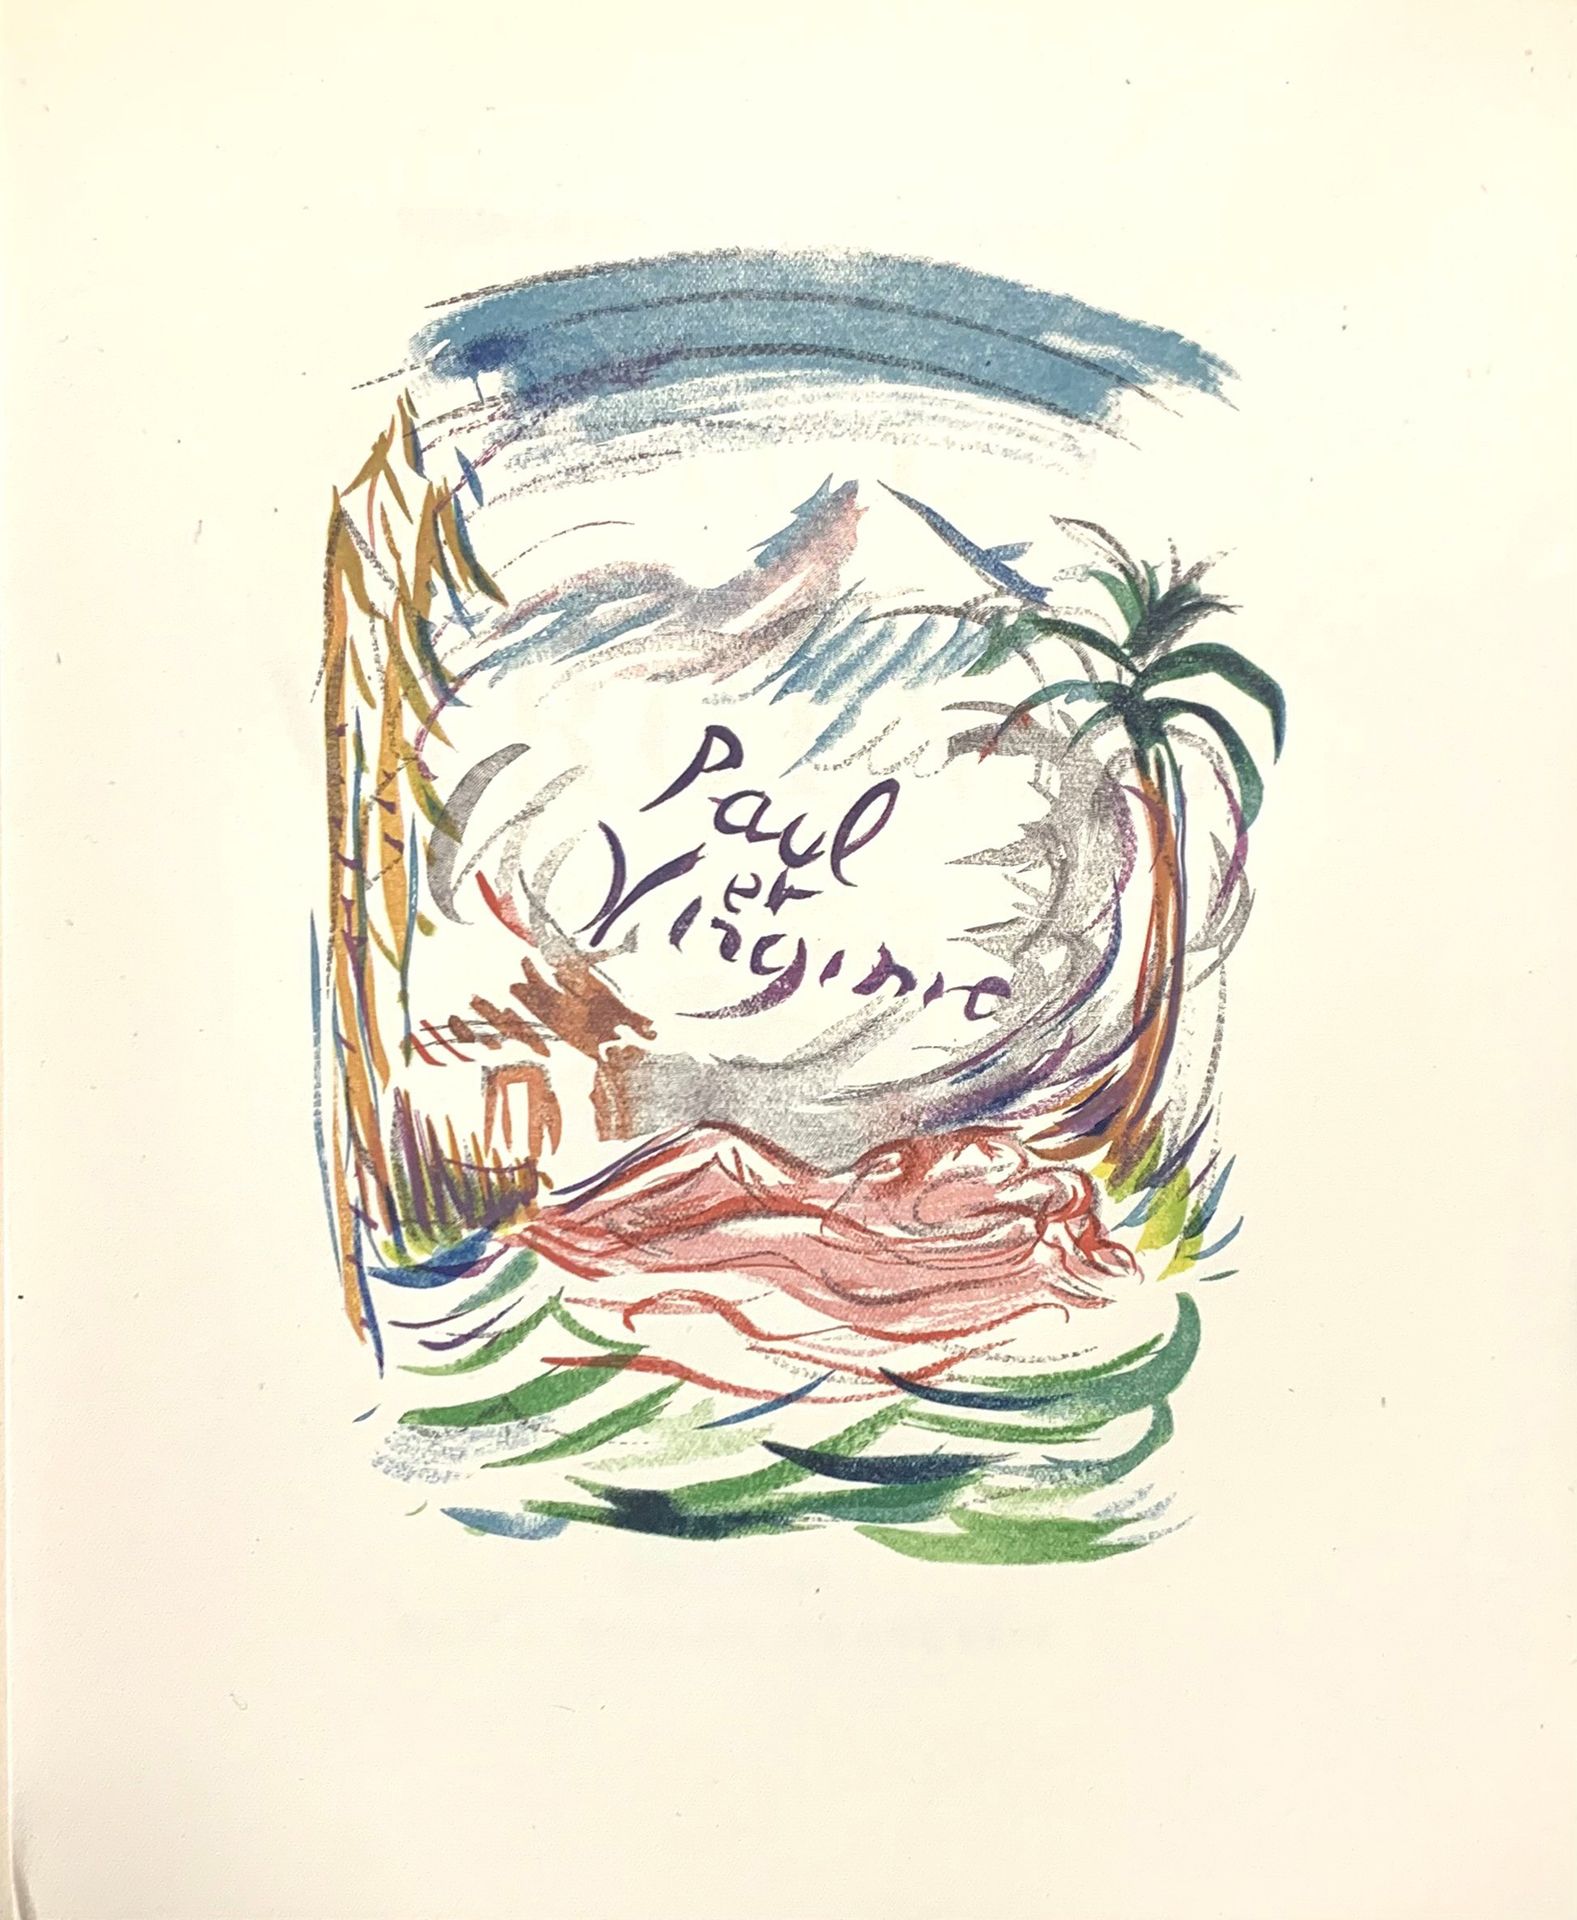 Othon FRIESZ (1879-1949) PAUL ET VIRGINIE, 1947
彩色木刻插图
编号为15个中的第6个，包括一套独立的插图
法国之&hellip;